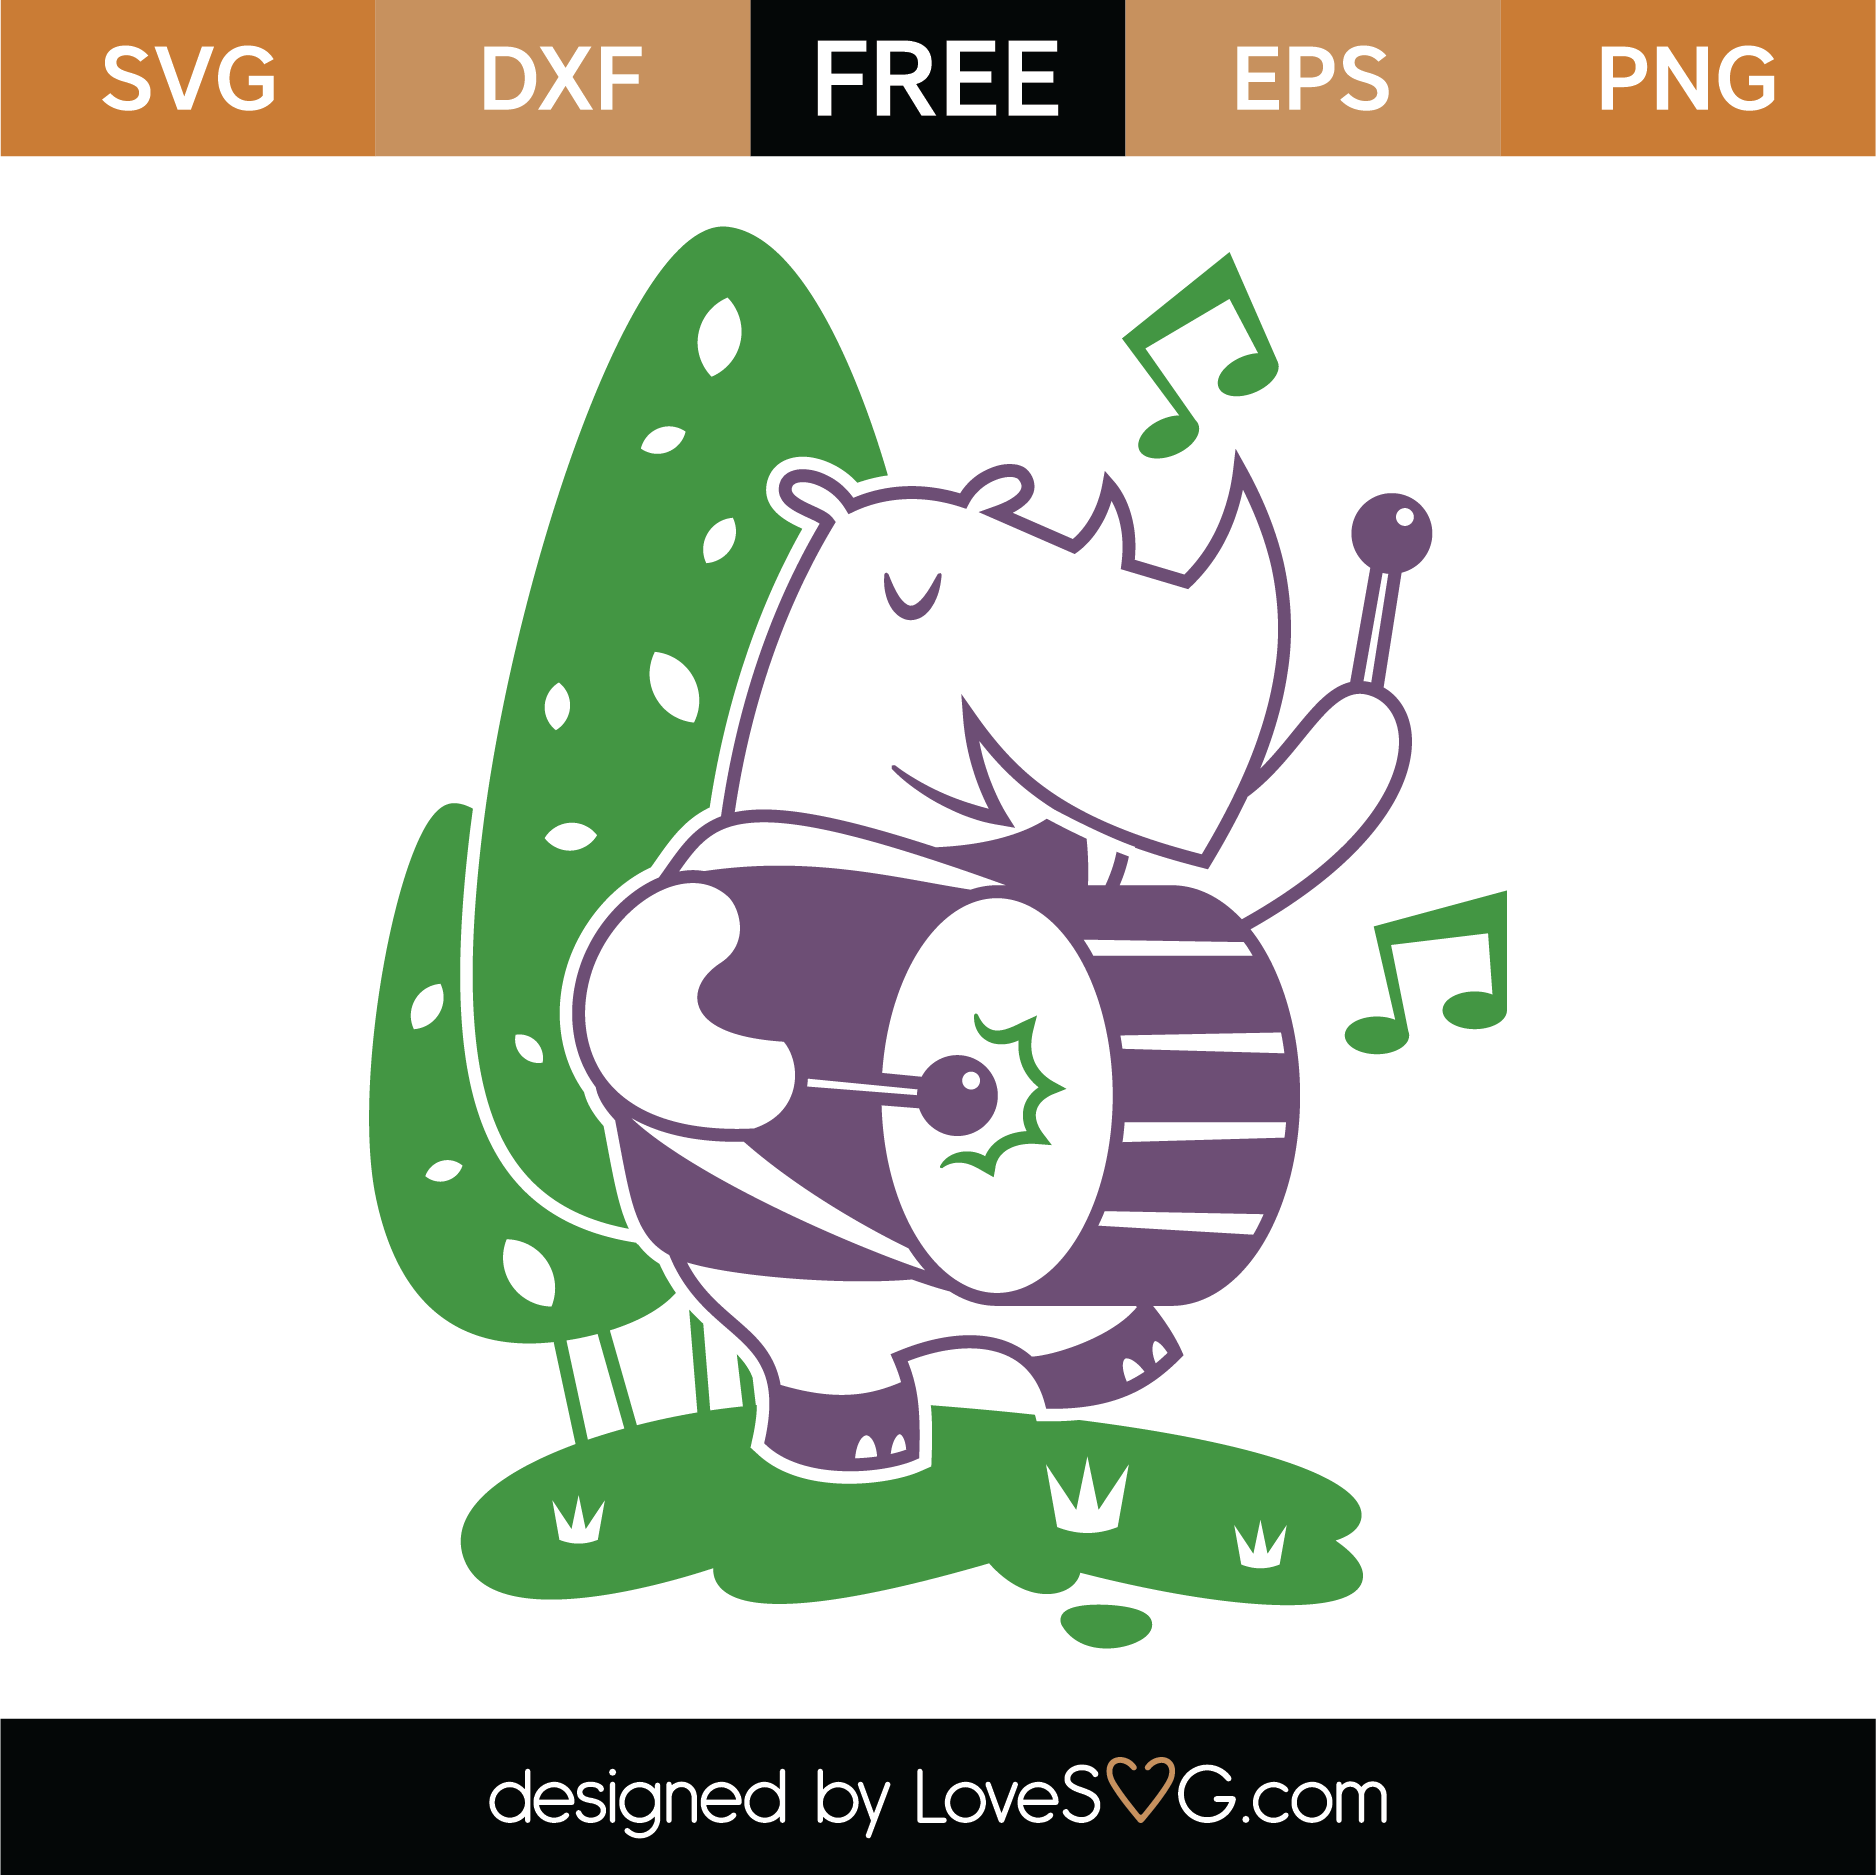 Free Whimsical Elephant SVG Cut File | Lovesvg.com